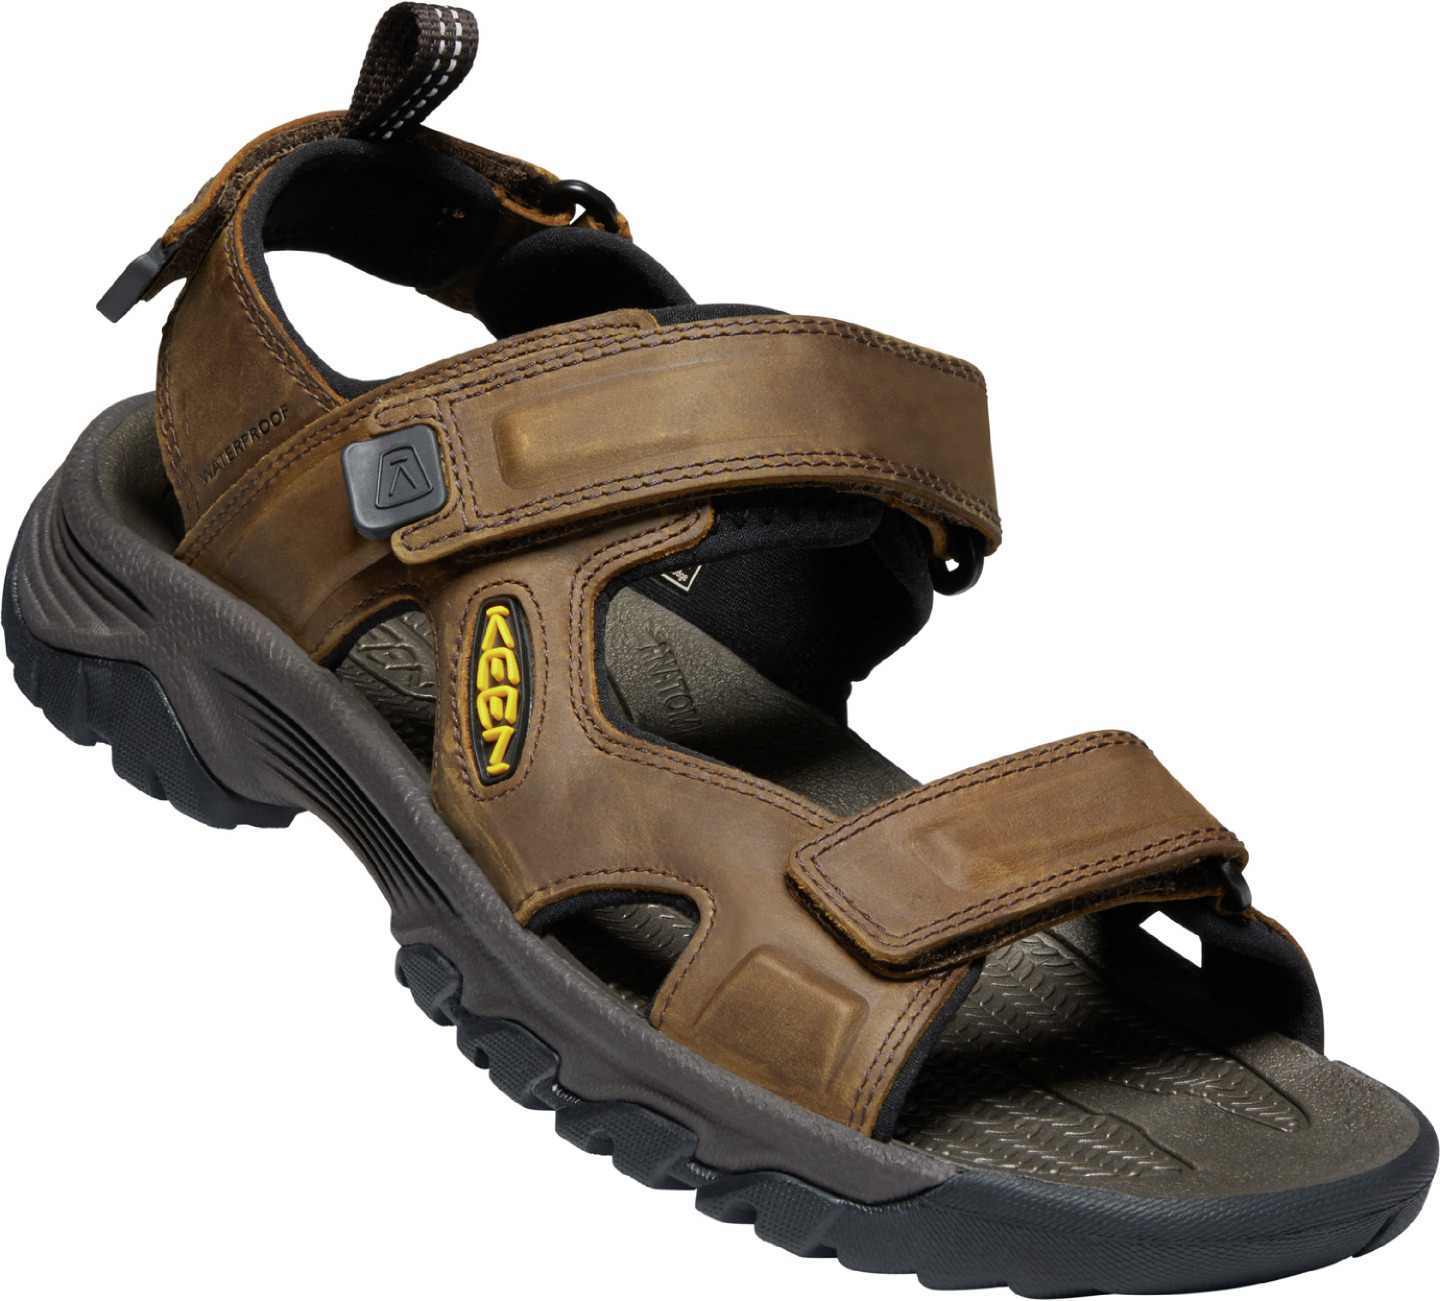 Keen pánské sandály Targhee III Open Toe Sandal Men - Bison/Mulch Barva: bison/mulch, Velikost: 12 UK (47 EU / 31 cm)